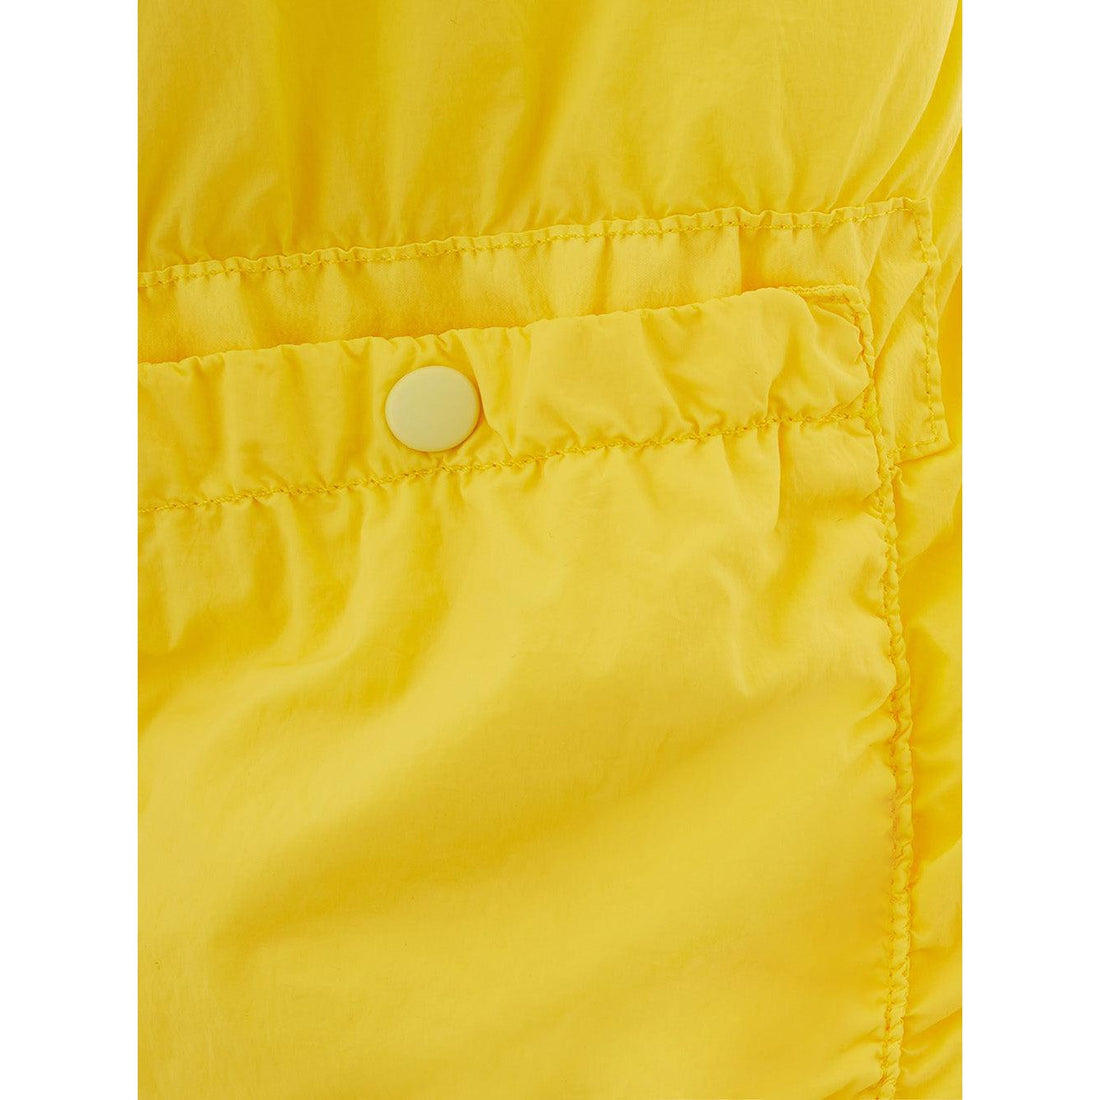 Woolrich Elegant Yellow Quilted Lightweight Jacket